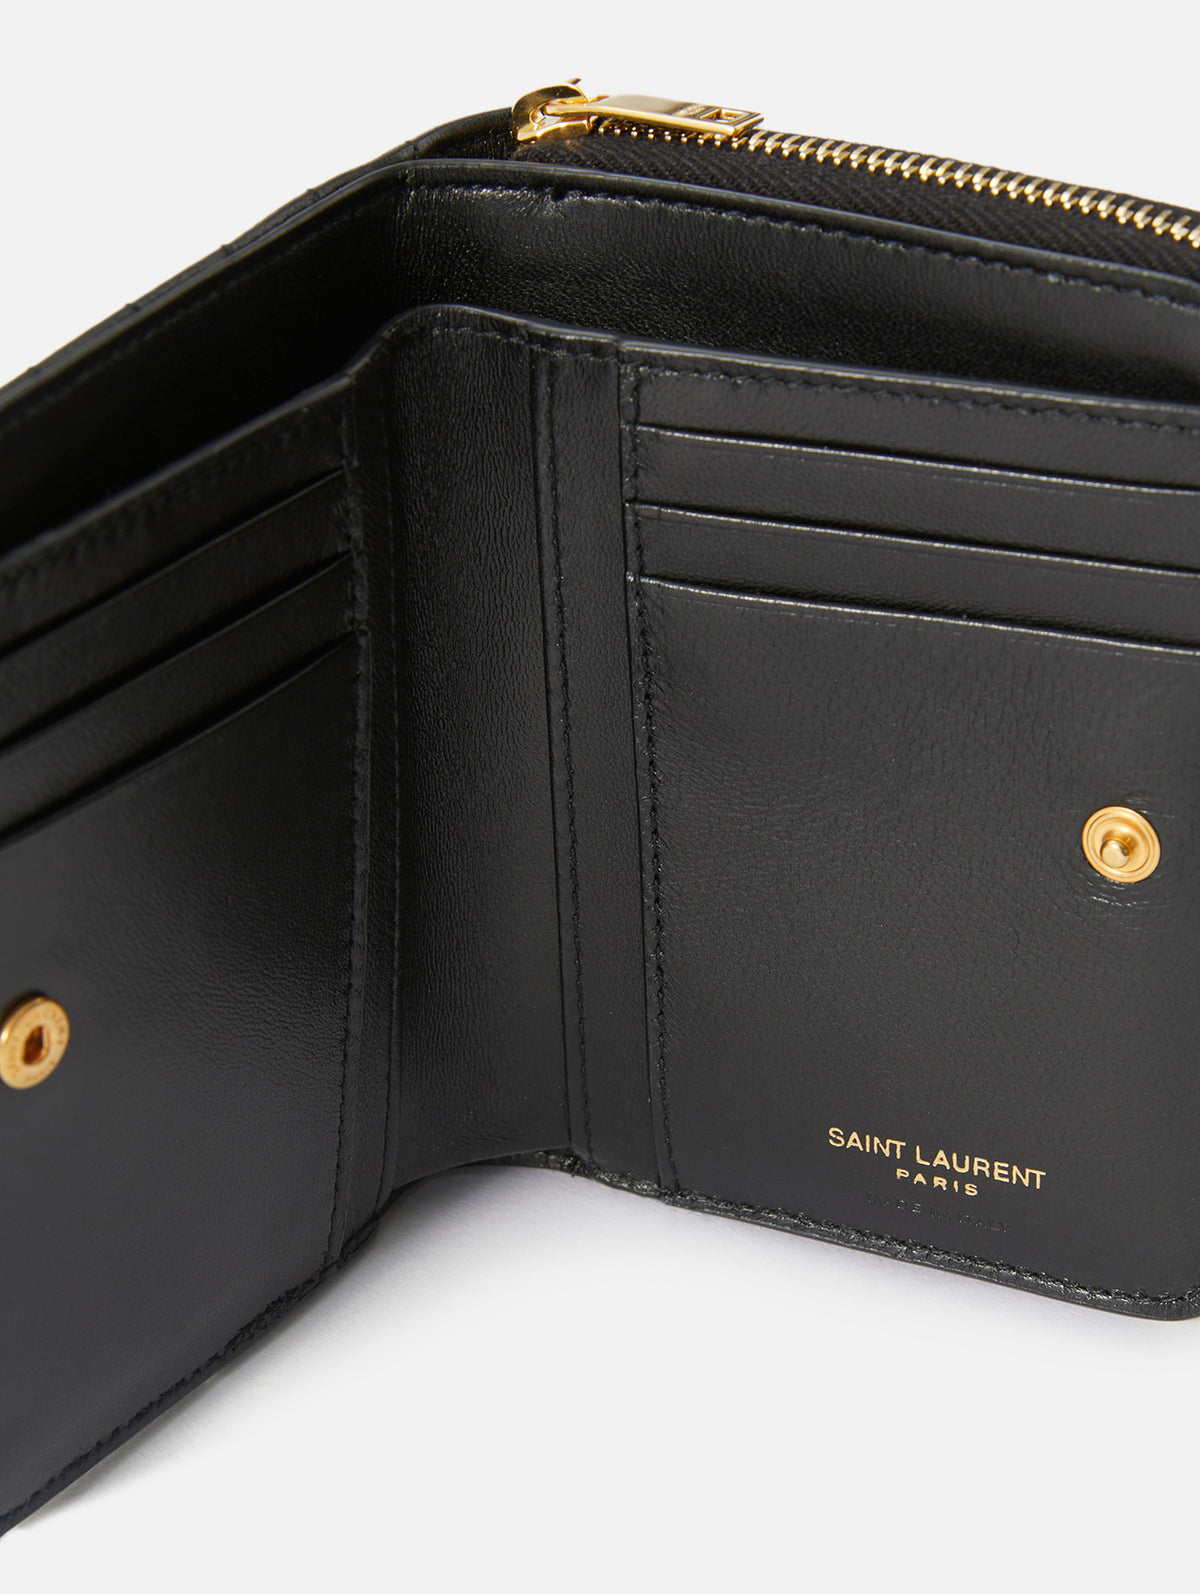 Saint Laurent Monogram Bifold Wallet - Brown - One Size